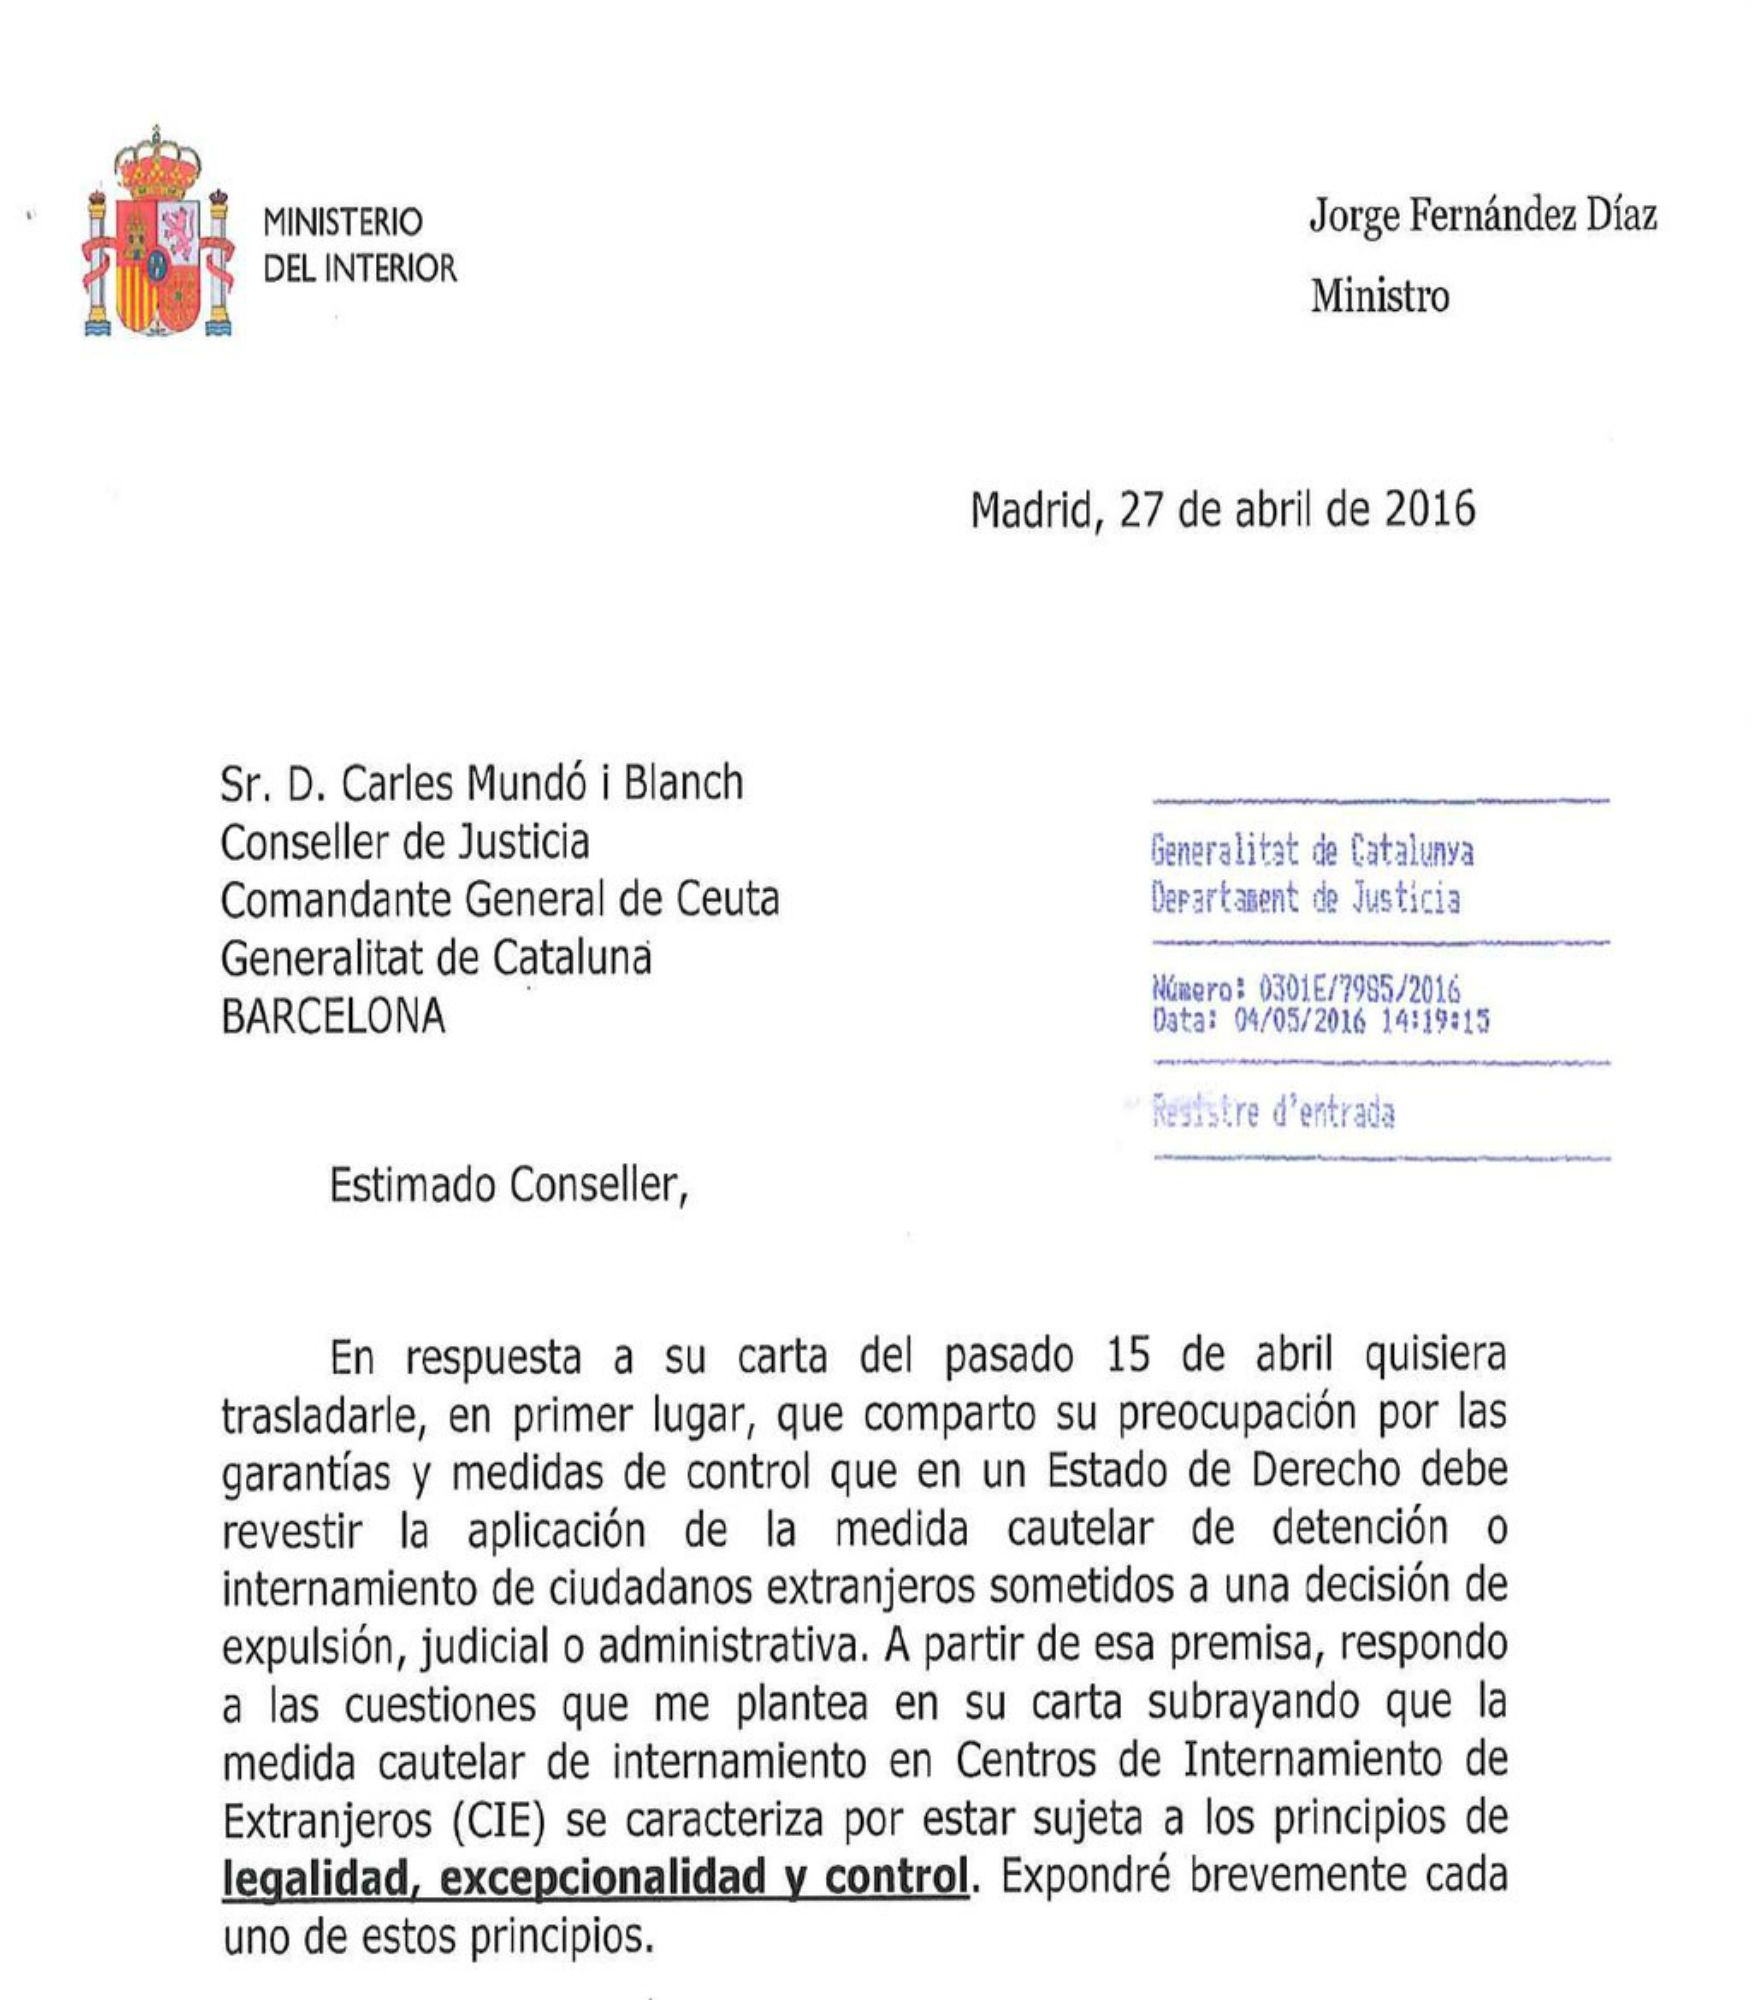 Pifia del ministerio del Interior: el conseller Mundó, "comandante general de Ceuta"